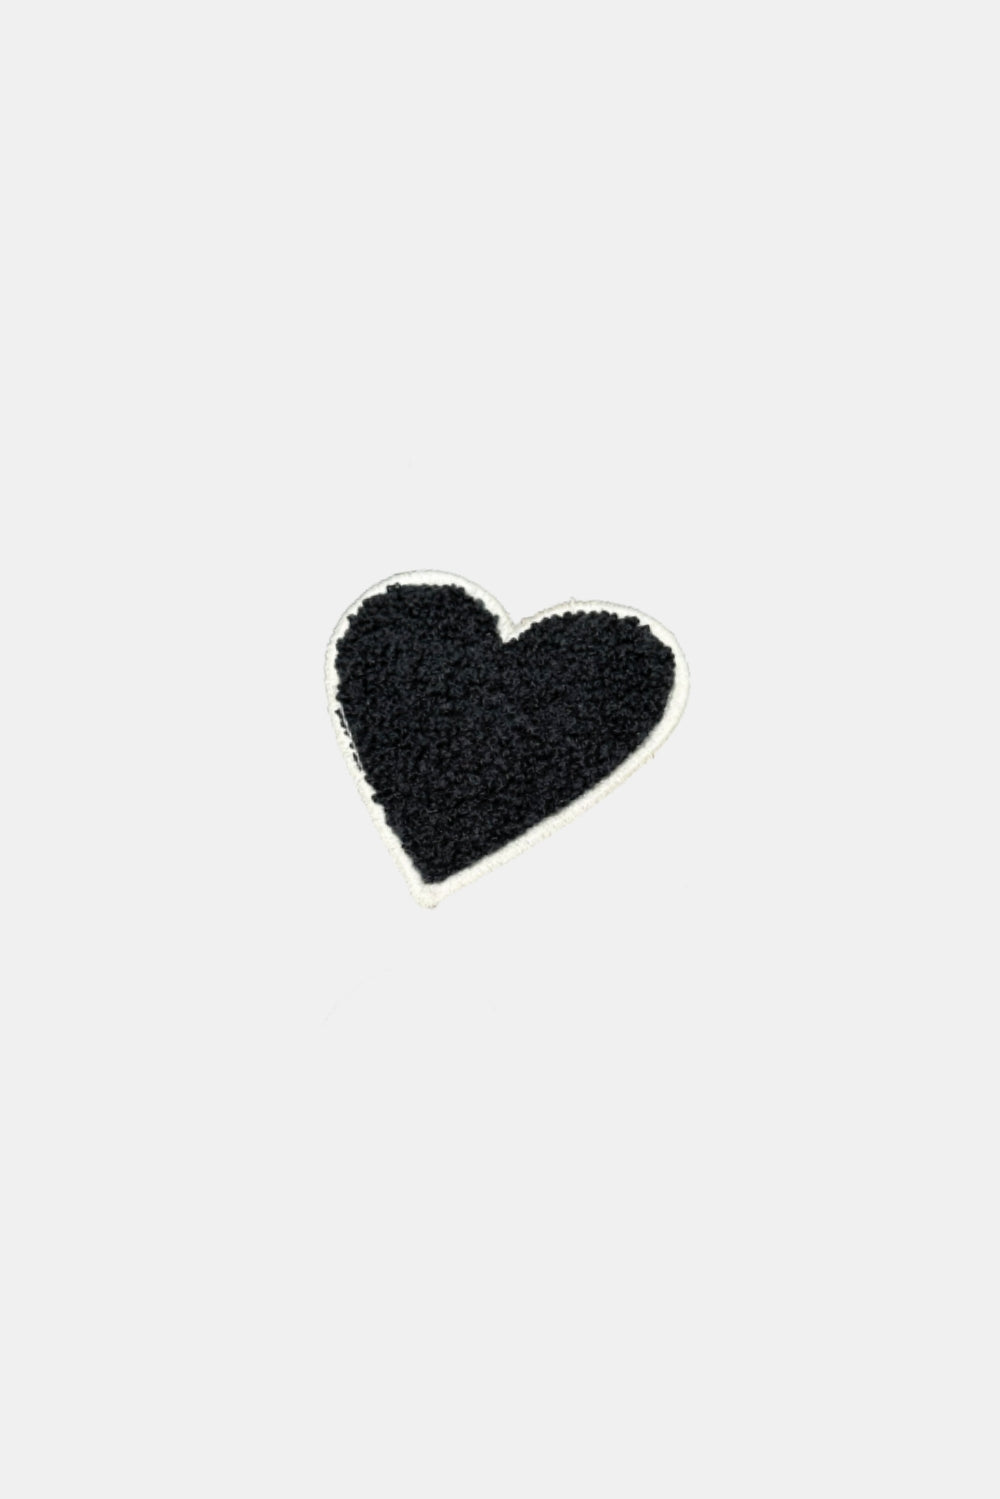 Heart Patch Comfort Dark Black T-shirt